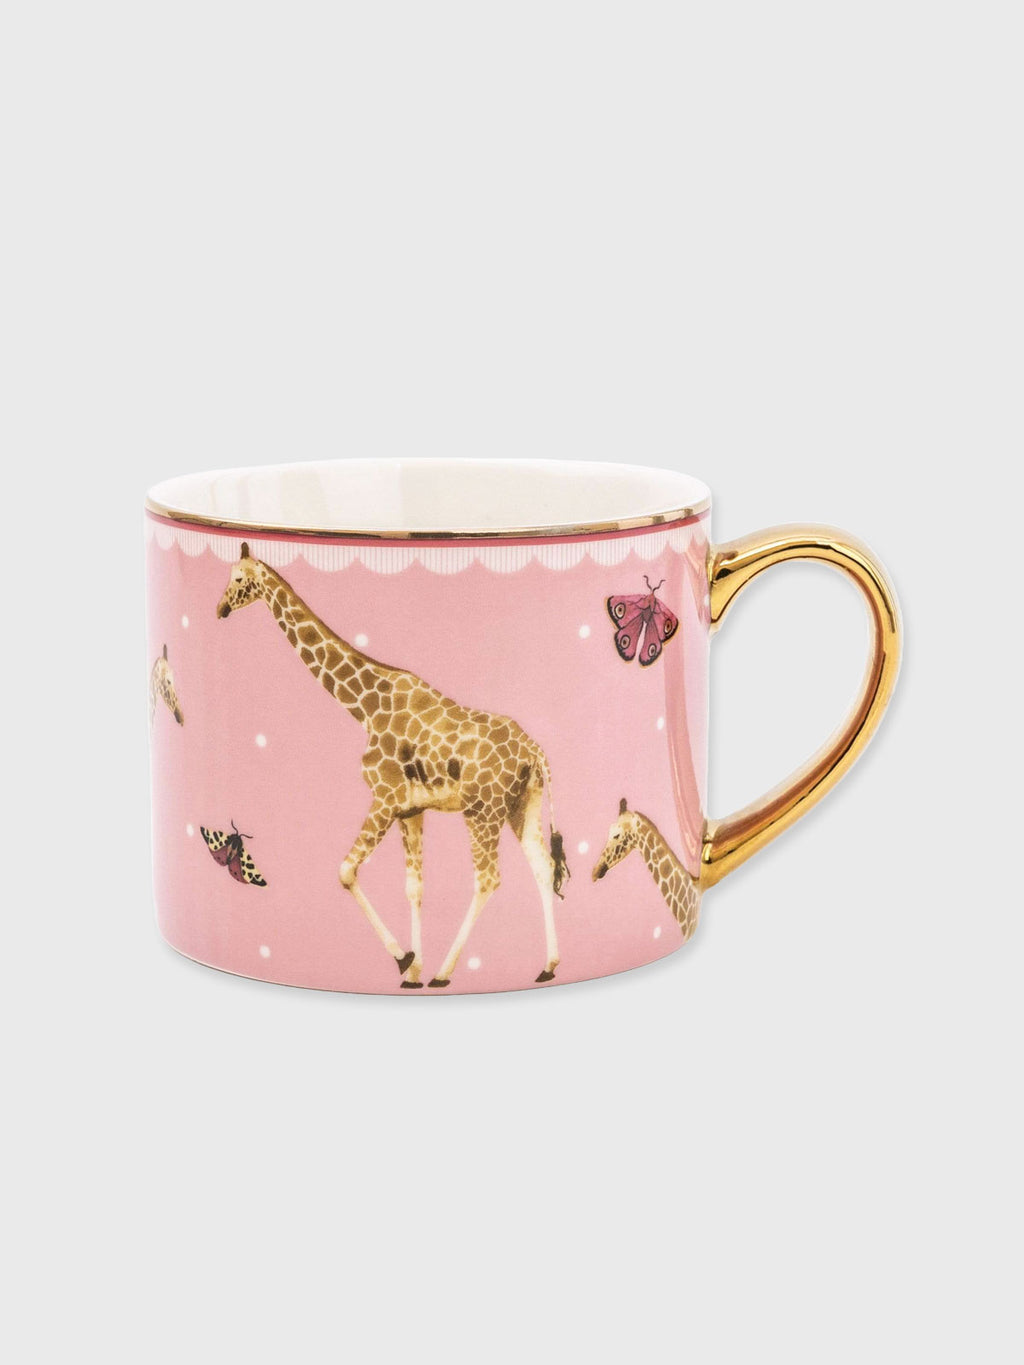 Pink Mug with Gold Handle - Giraffe